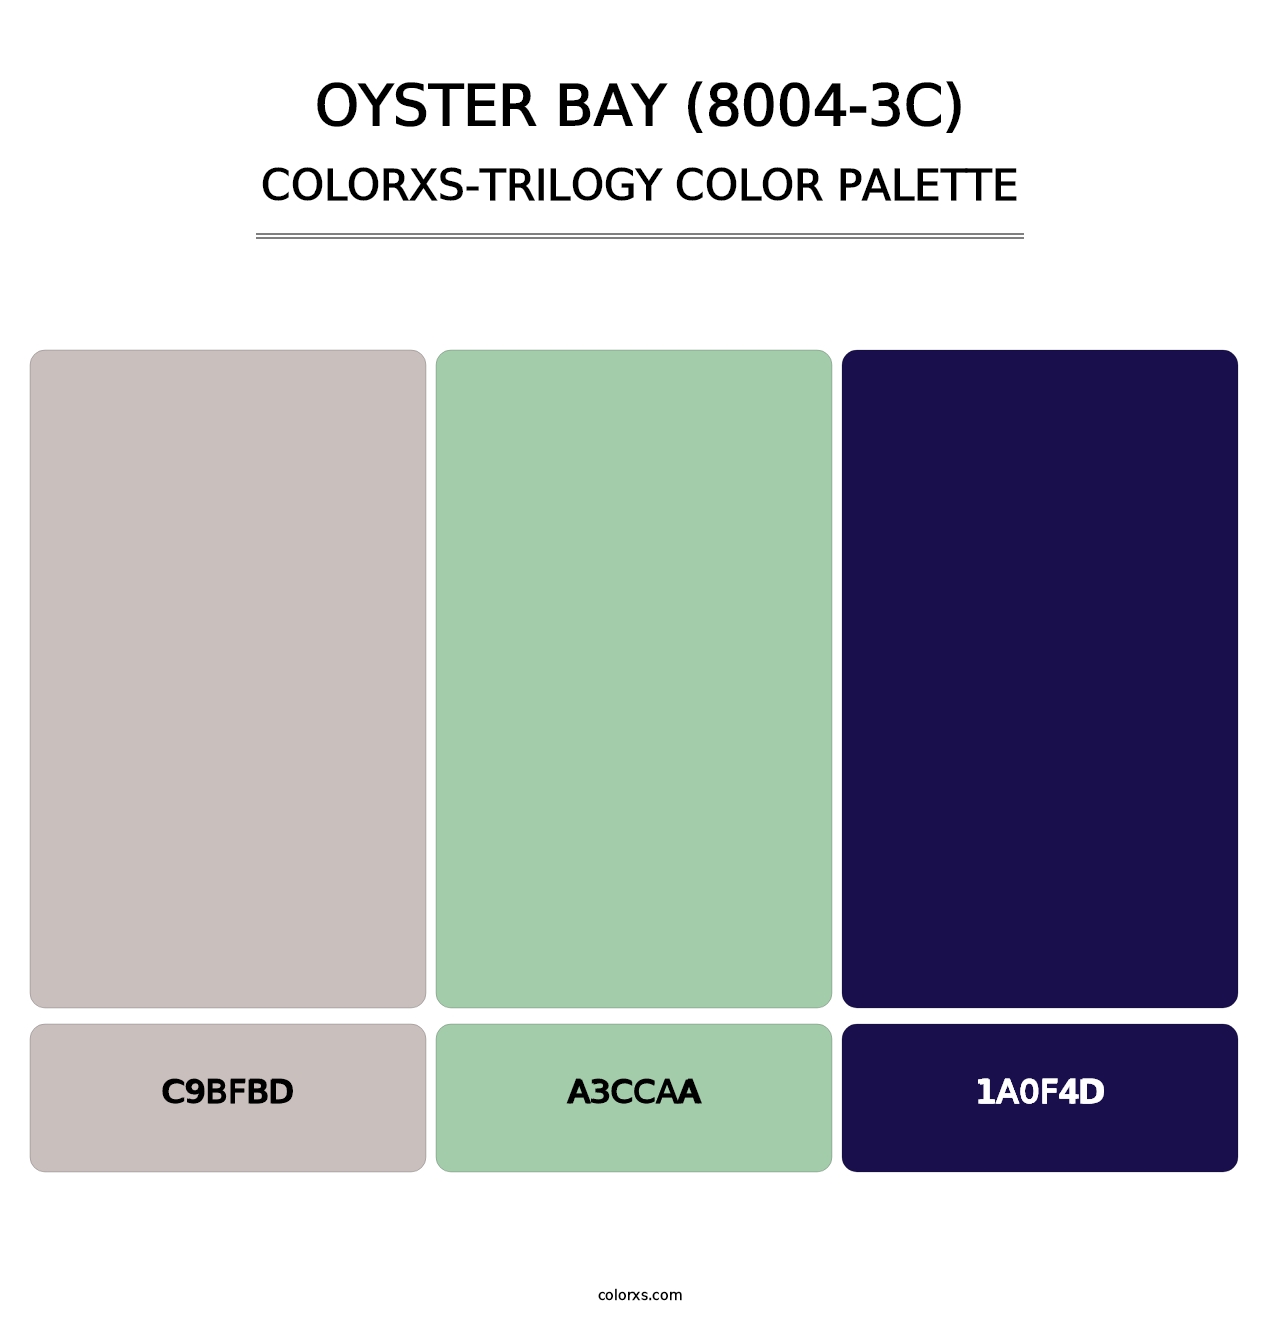 Oyster Bay (8004-3C) - Colorxs Trilogy Palette